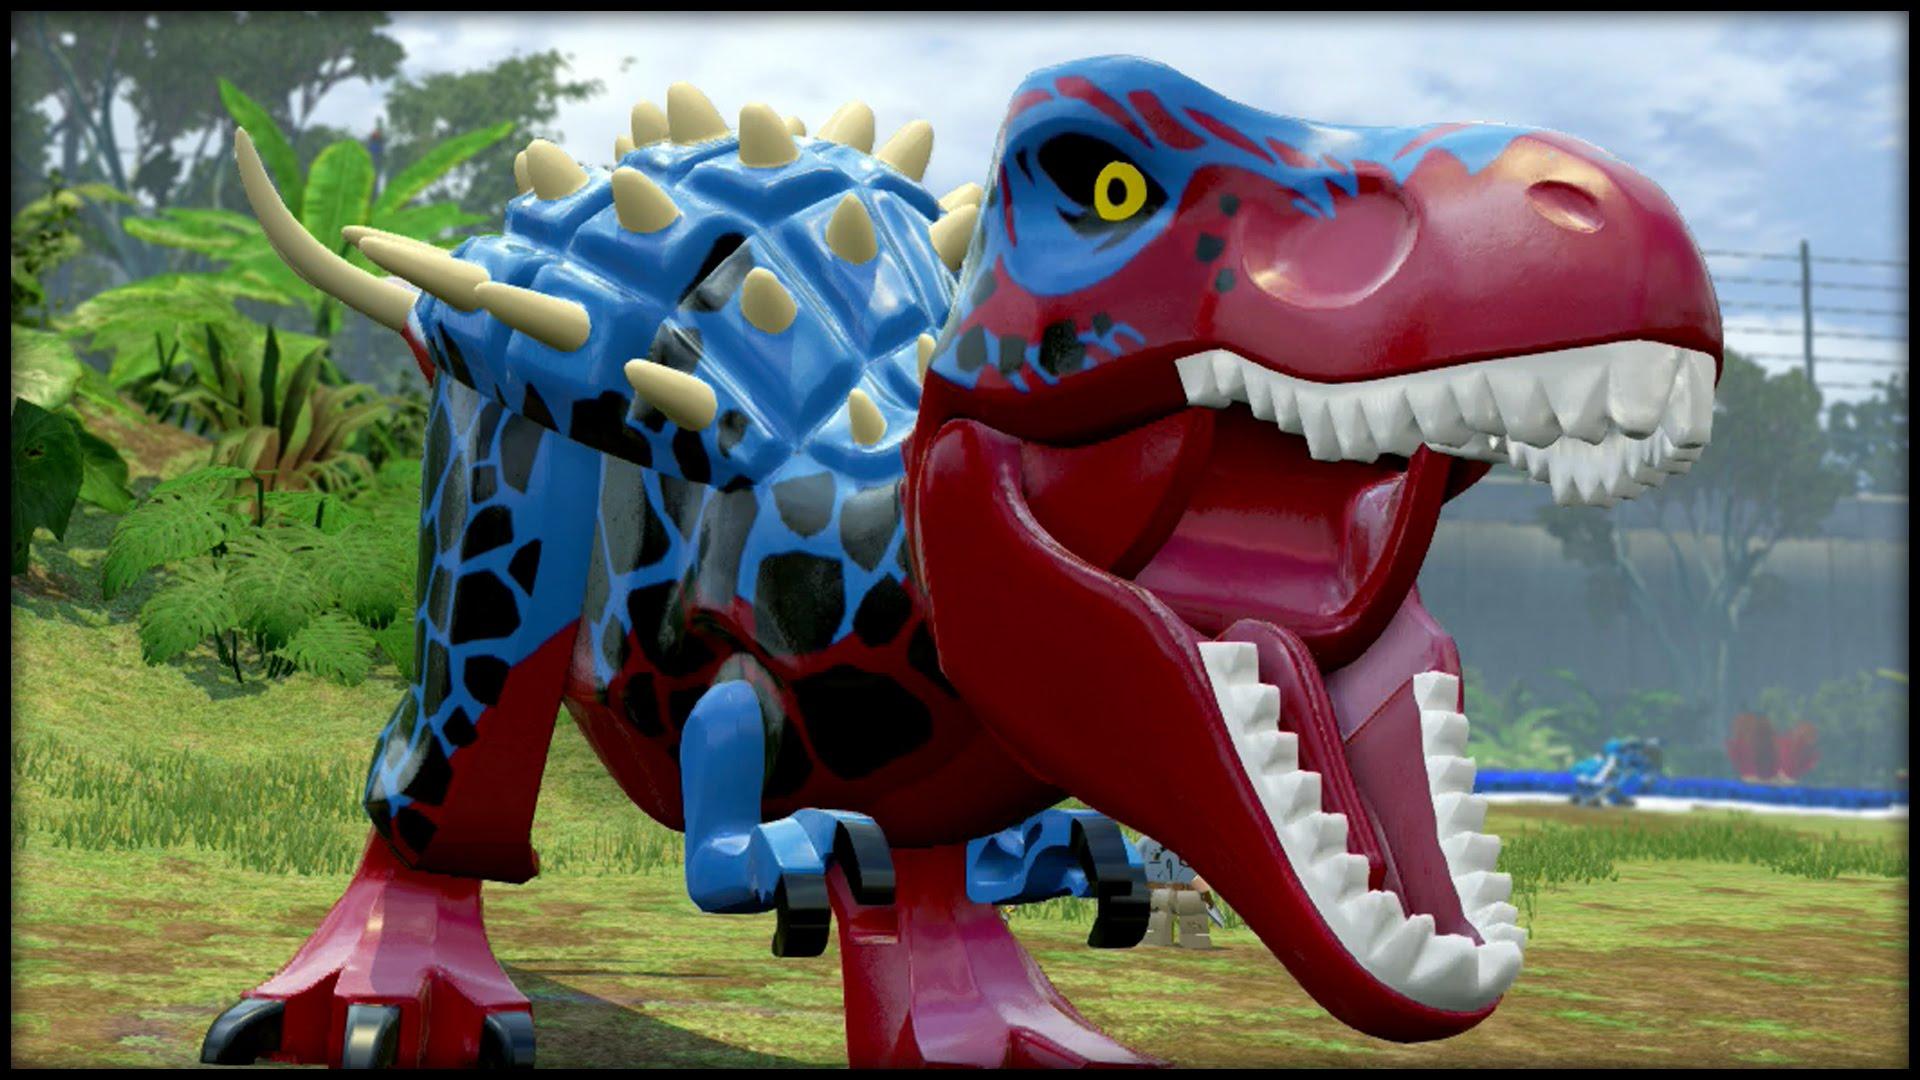 Lego jurassic world, Lego jurassic world dinosaurs, Jurassic world wallpaper